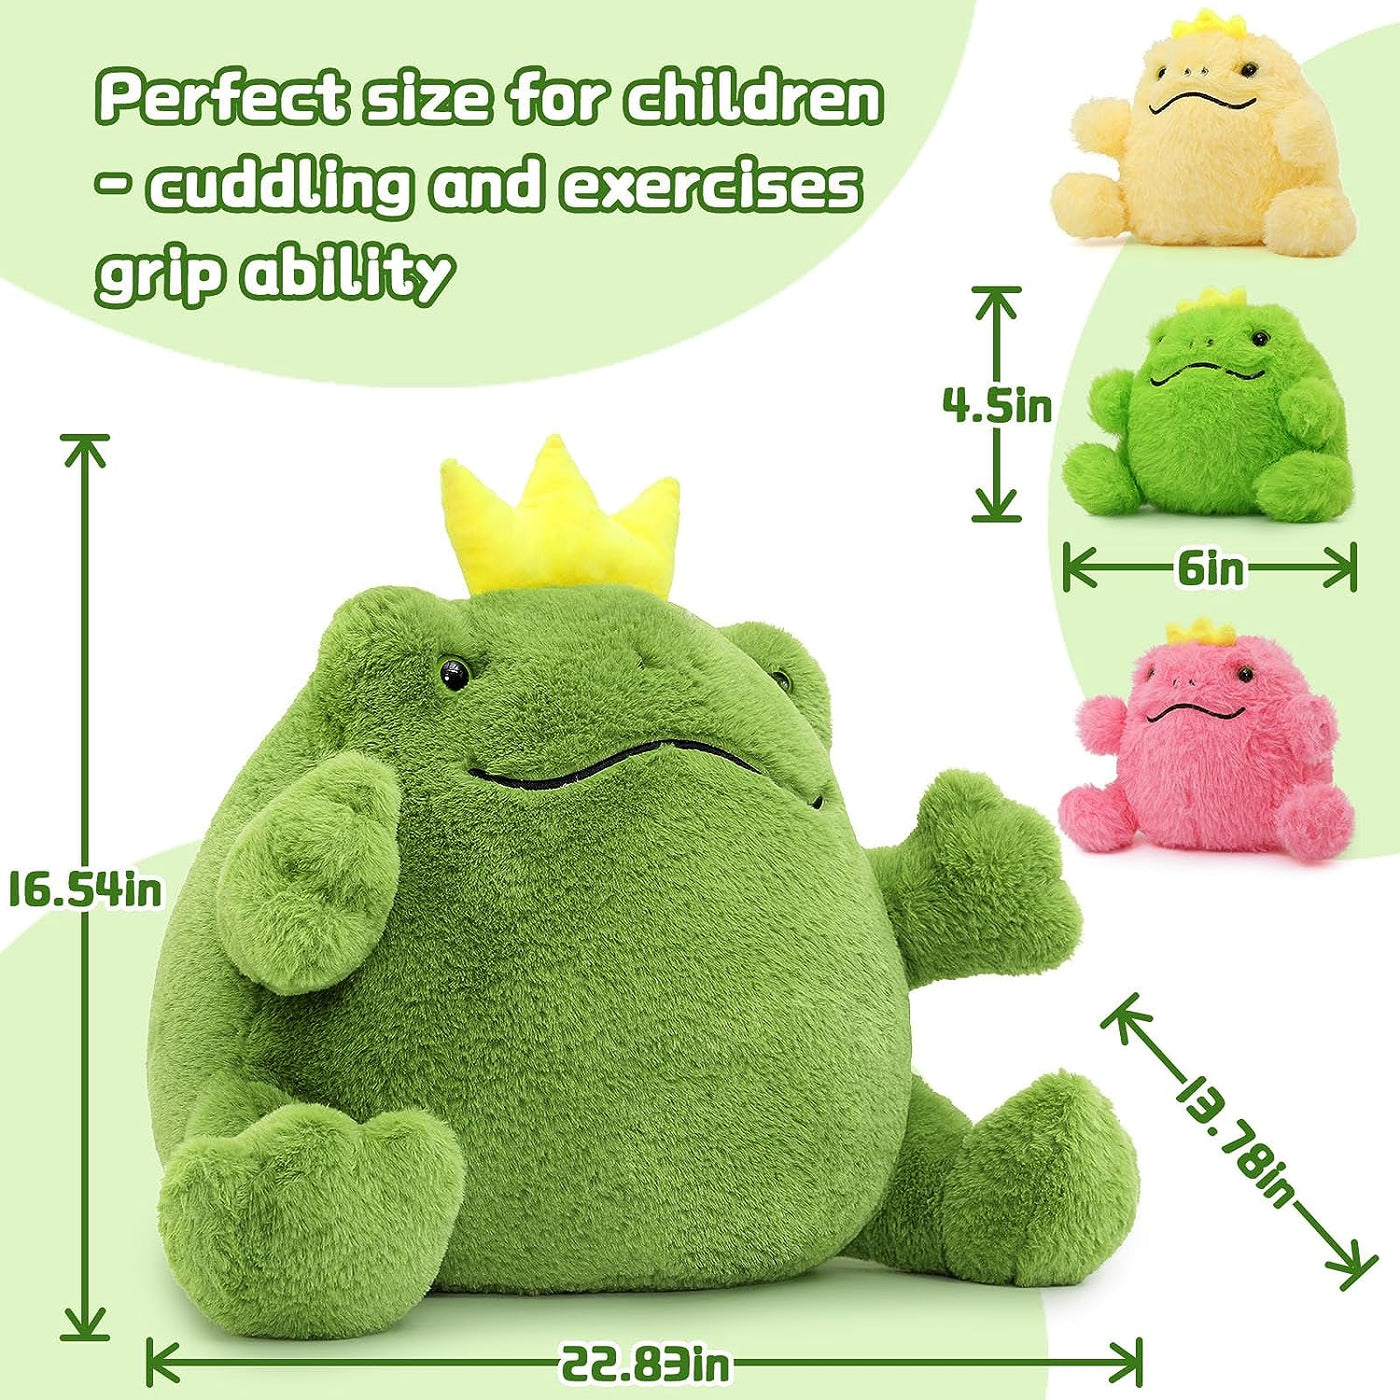 Frog Princess Stuffed Animal Toy Set, 17 Inches